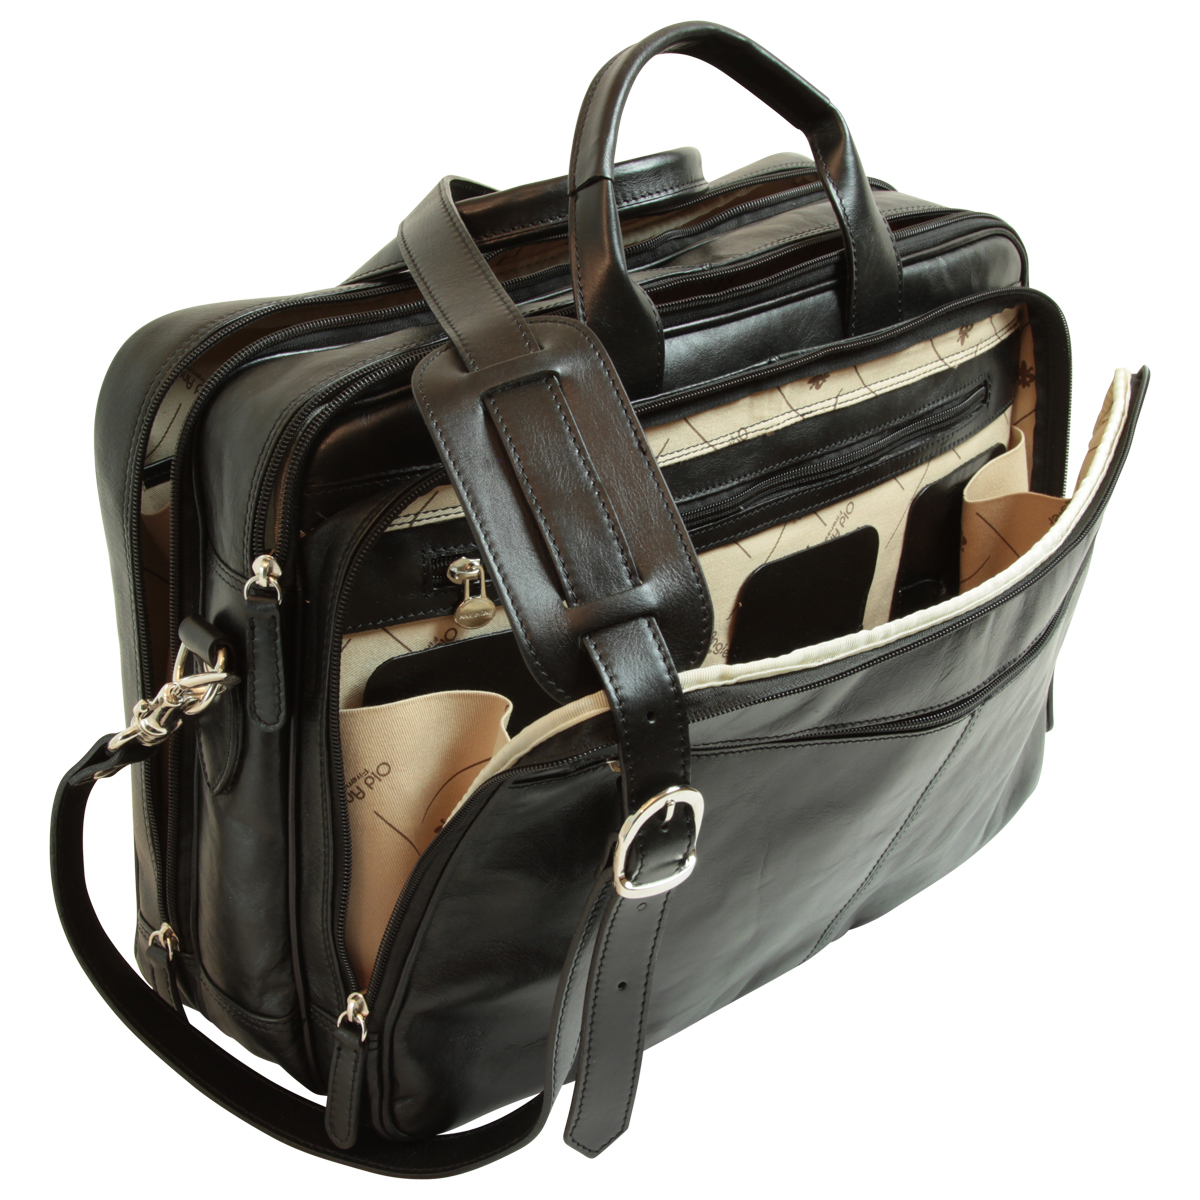 Italian Leather Briefcase - Black | 209589NE US | Old Angler Firenze